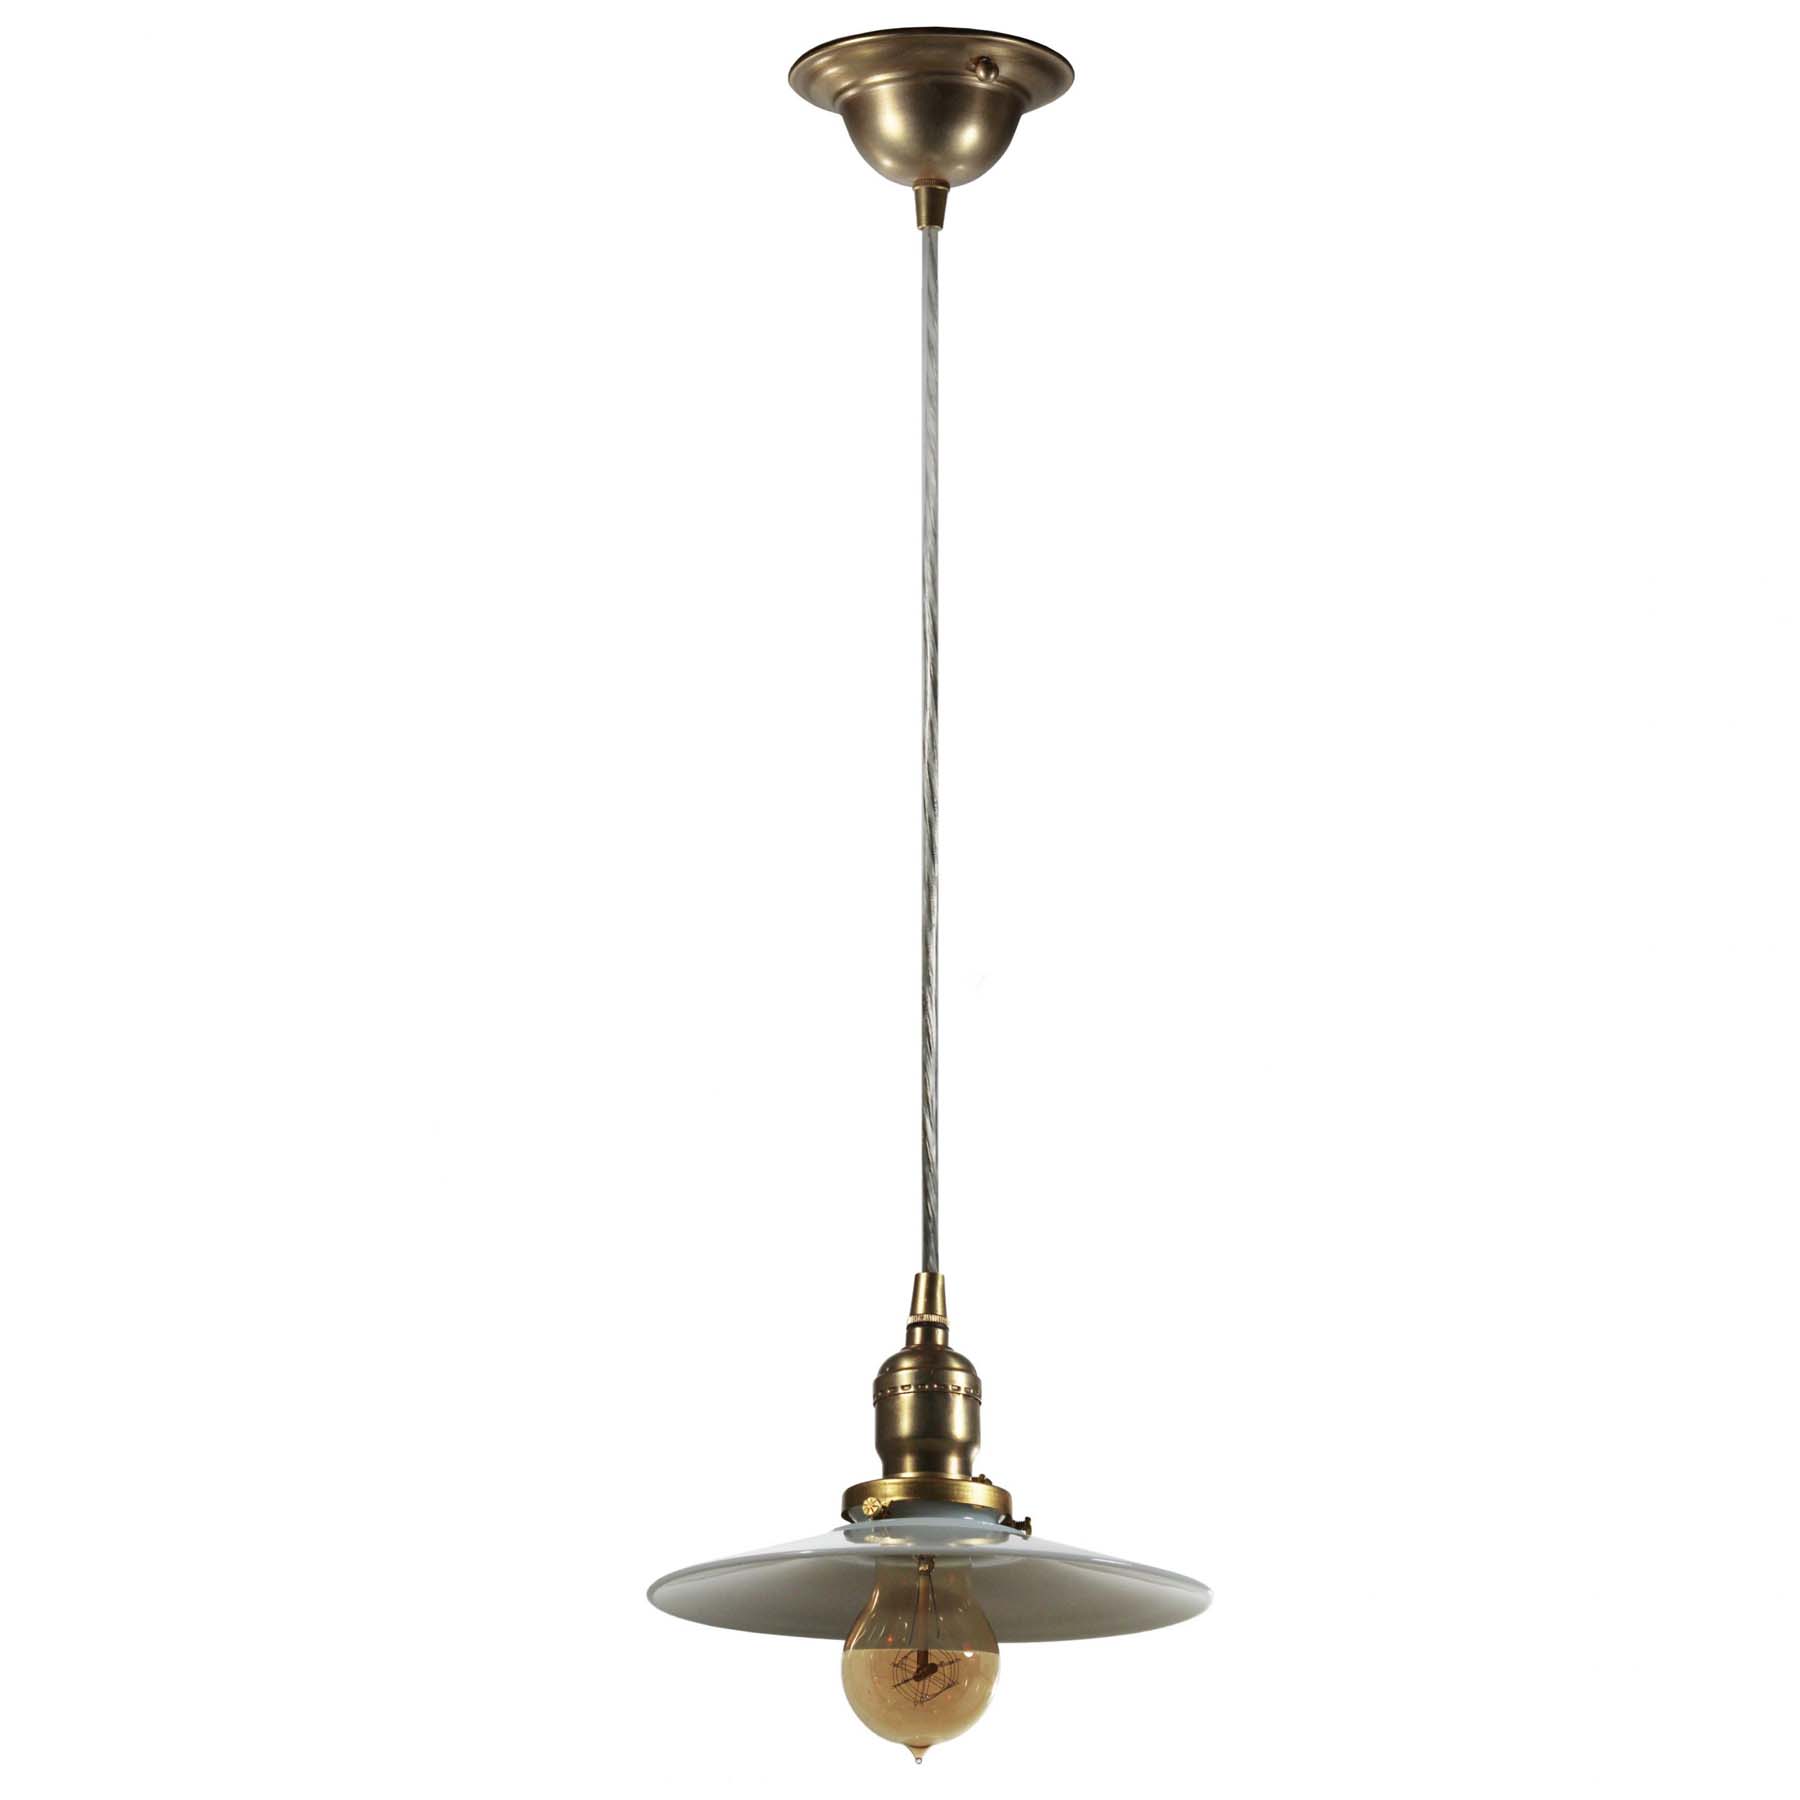 Brass Pendant Light with Milk Glass Shade, Antique Lighting-72426